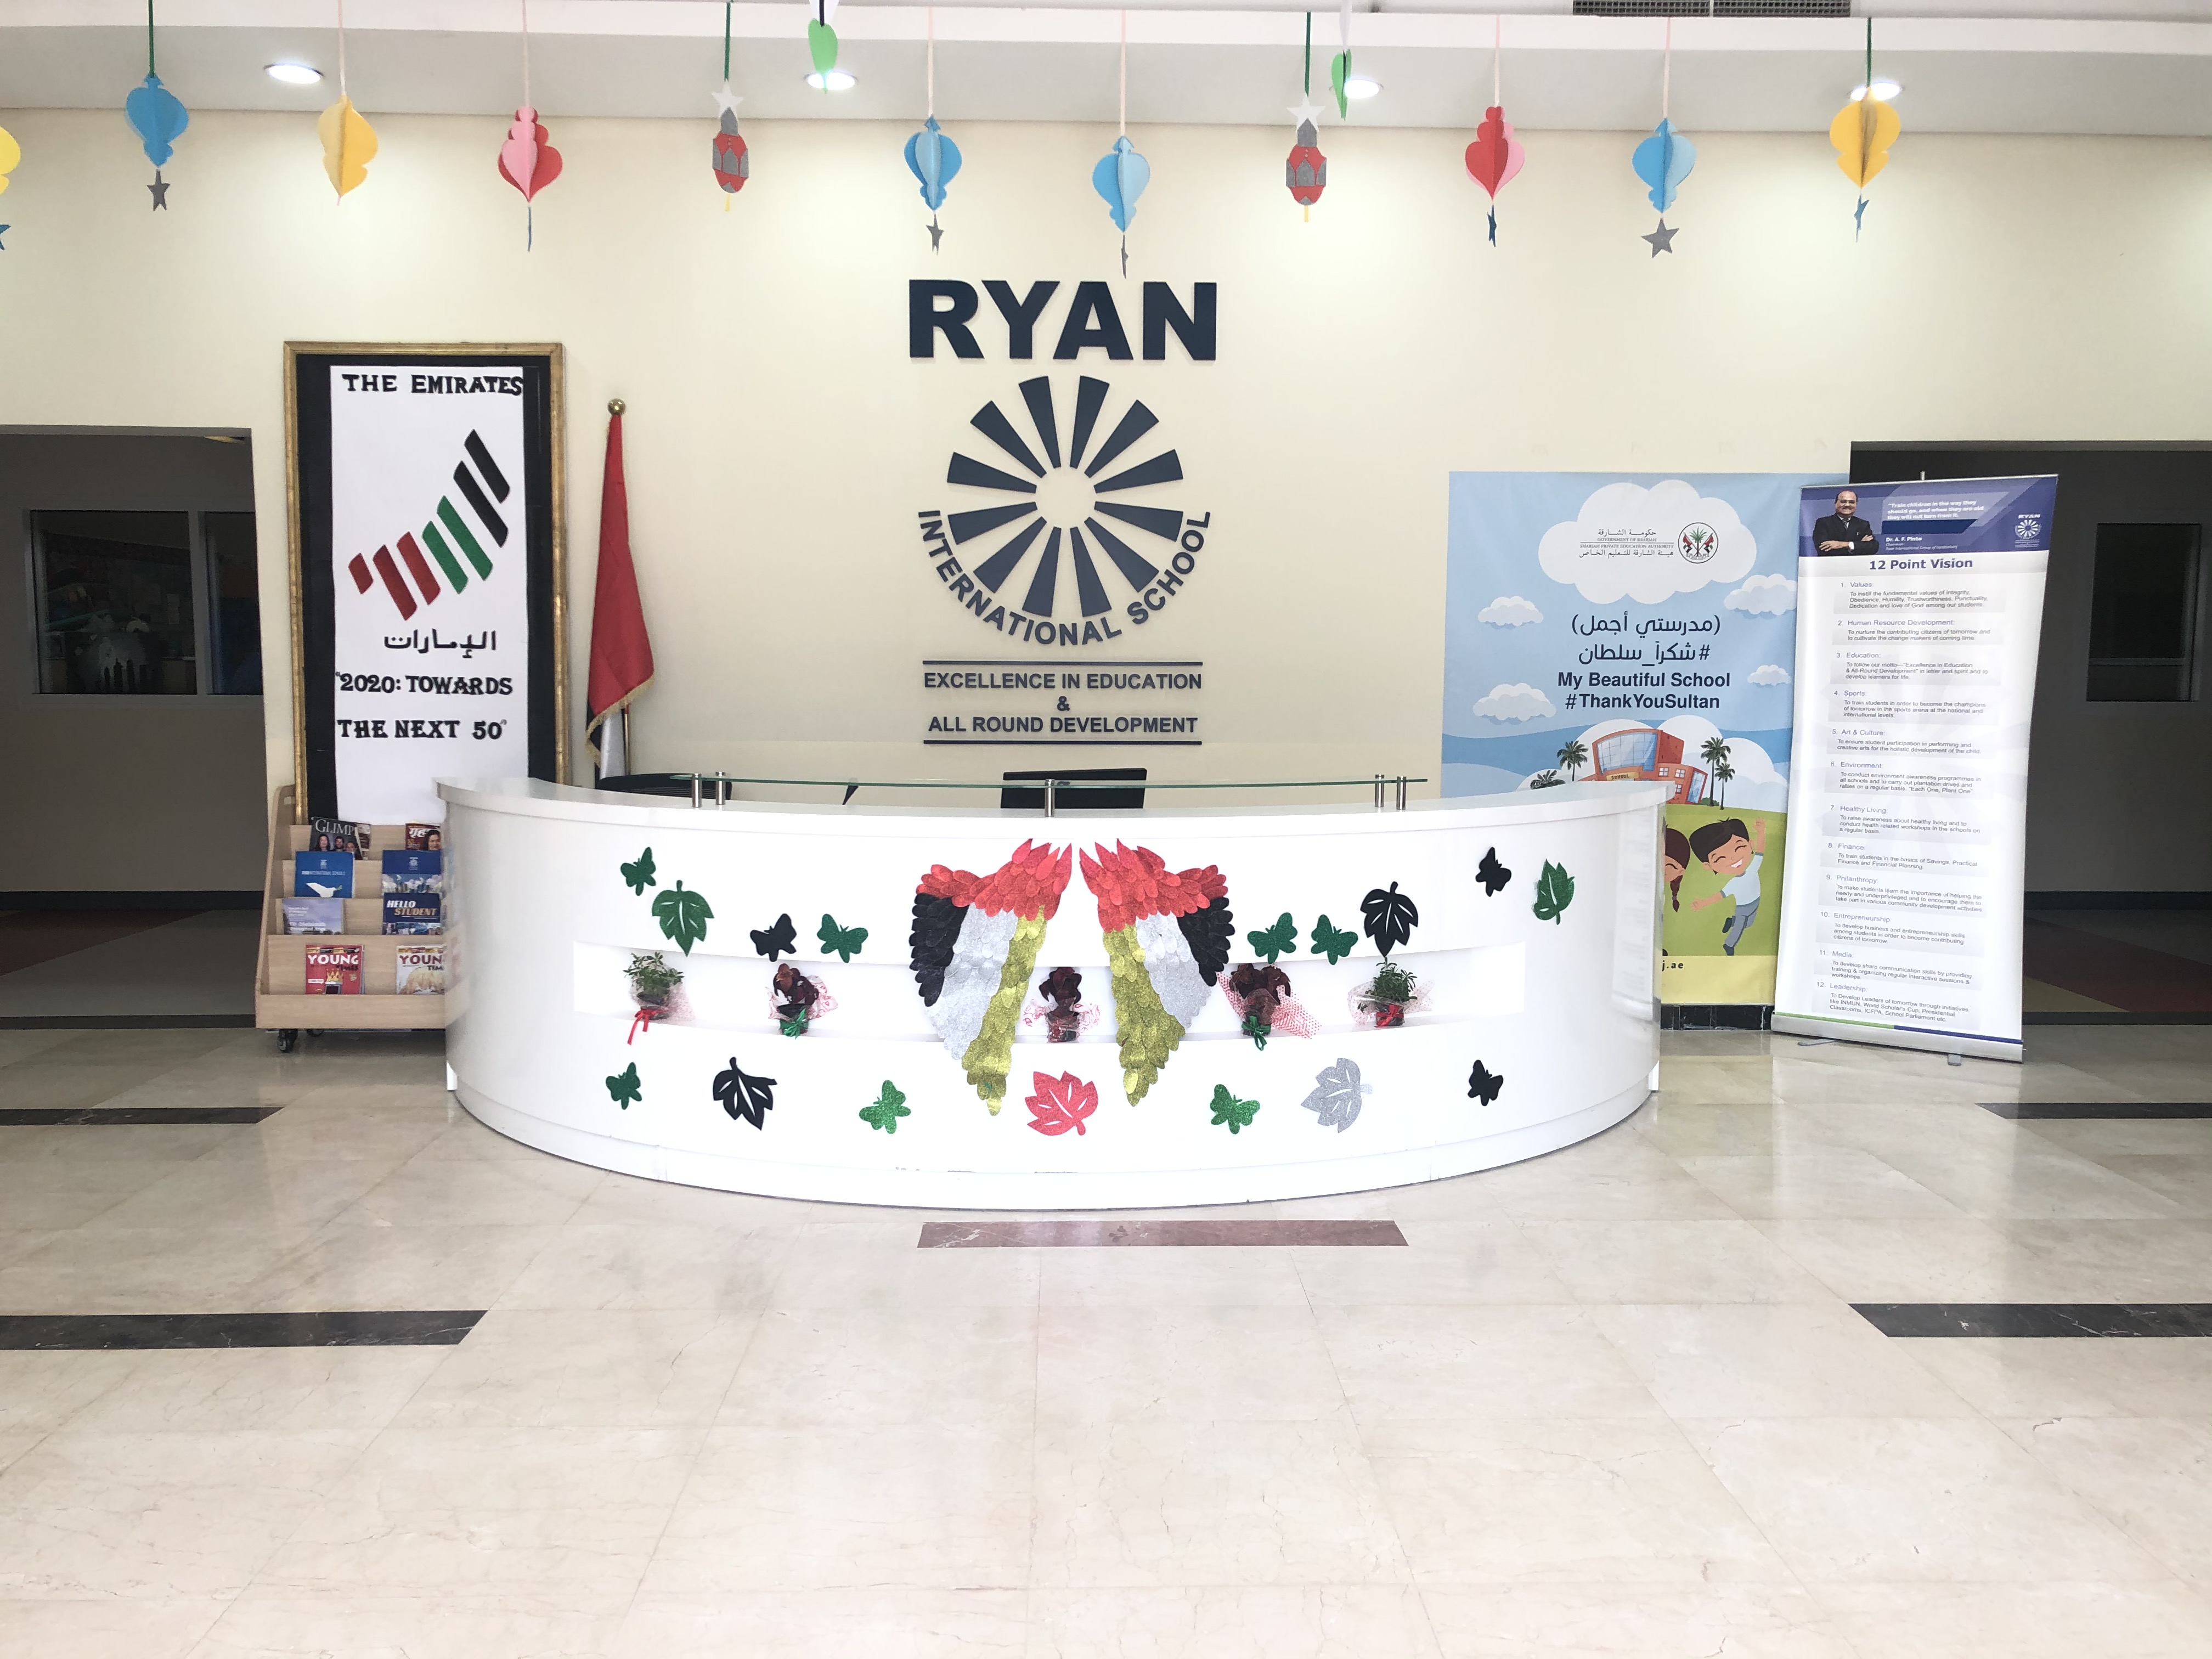 Ryan International School is one of the top 10 schools in Sharjah - Ryan International School, Sharjah Ryan International School - Ryan Group